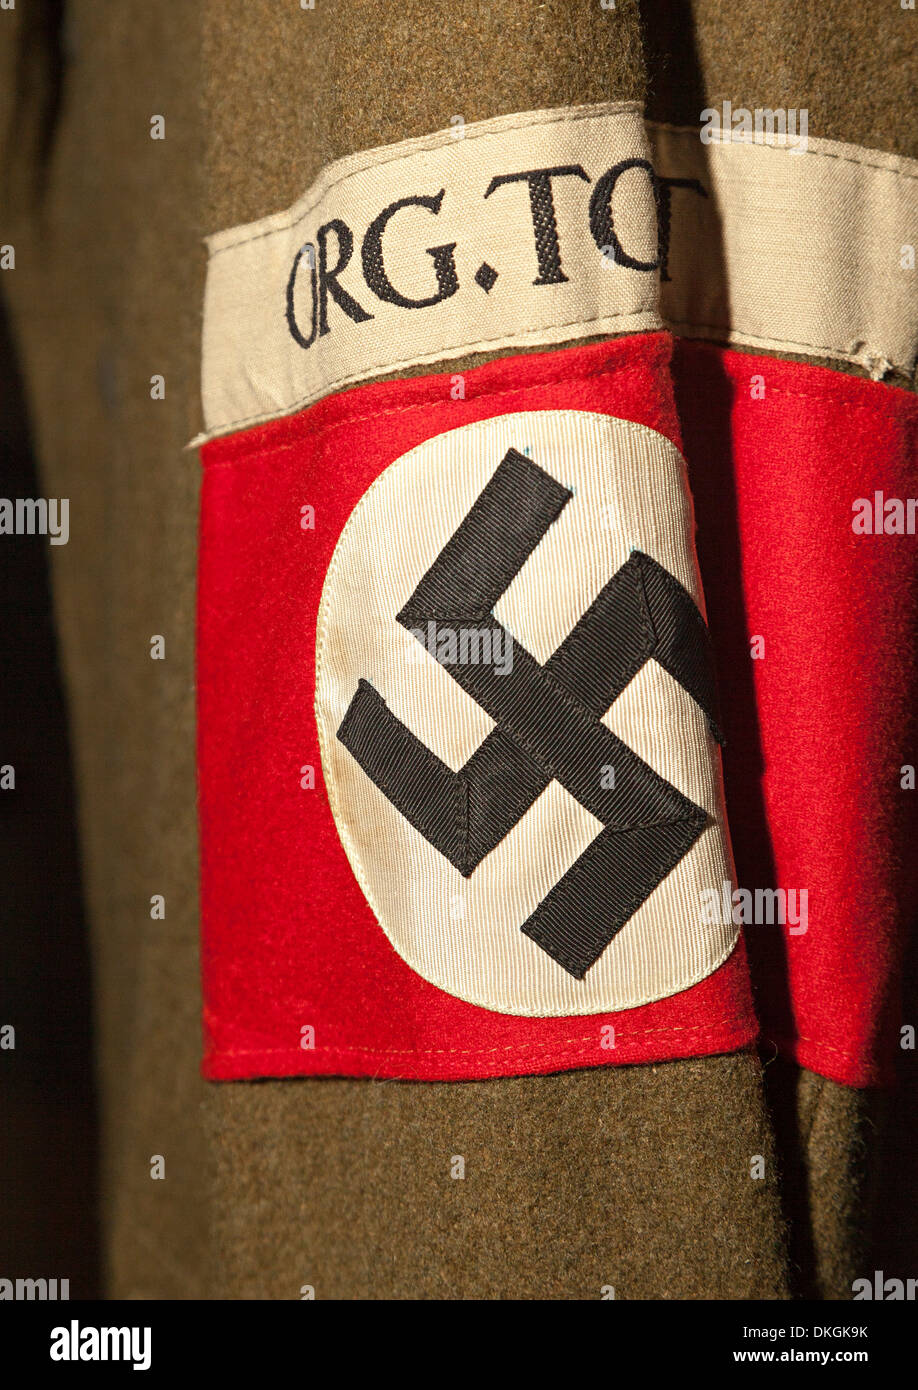 Swastika armband on German uniform Stock Photo